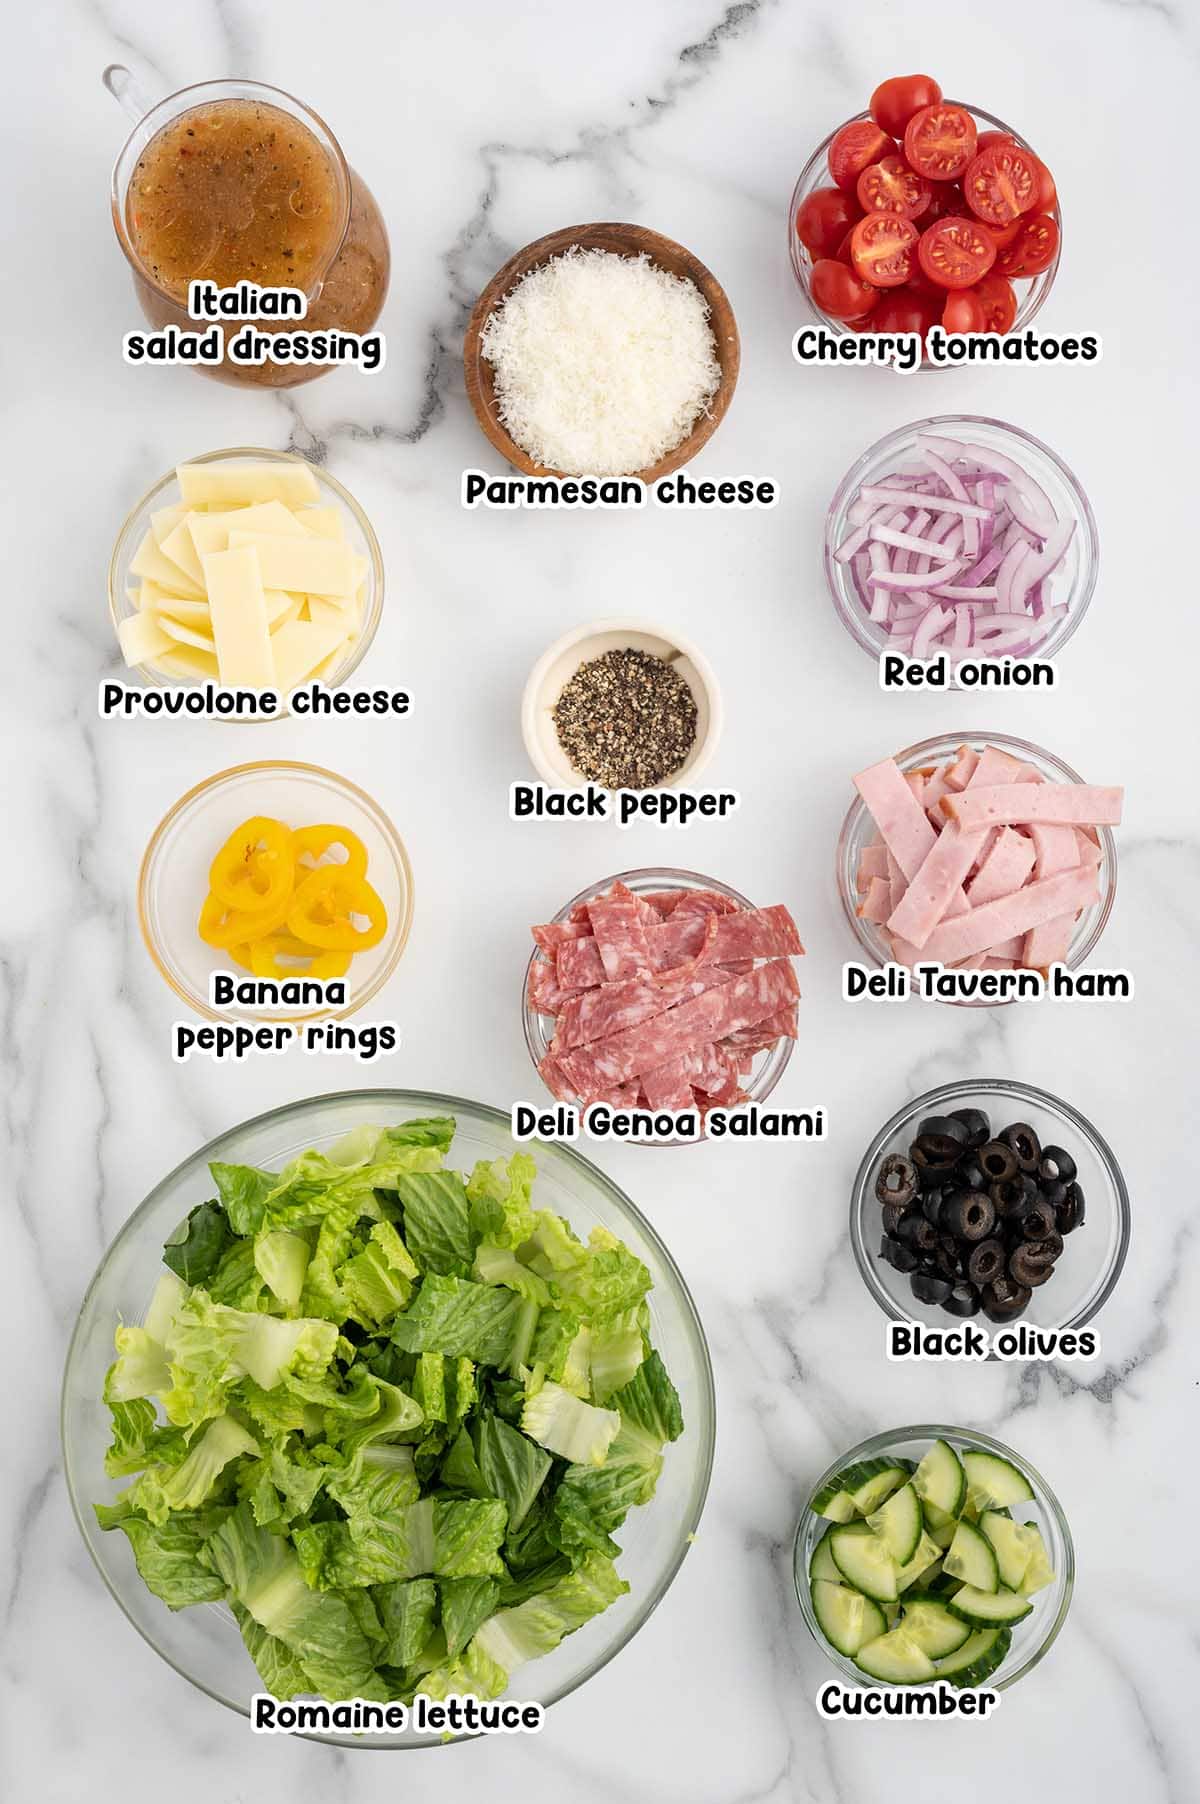 Sub Sandwich in a Bowl ingredients.